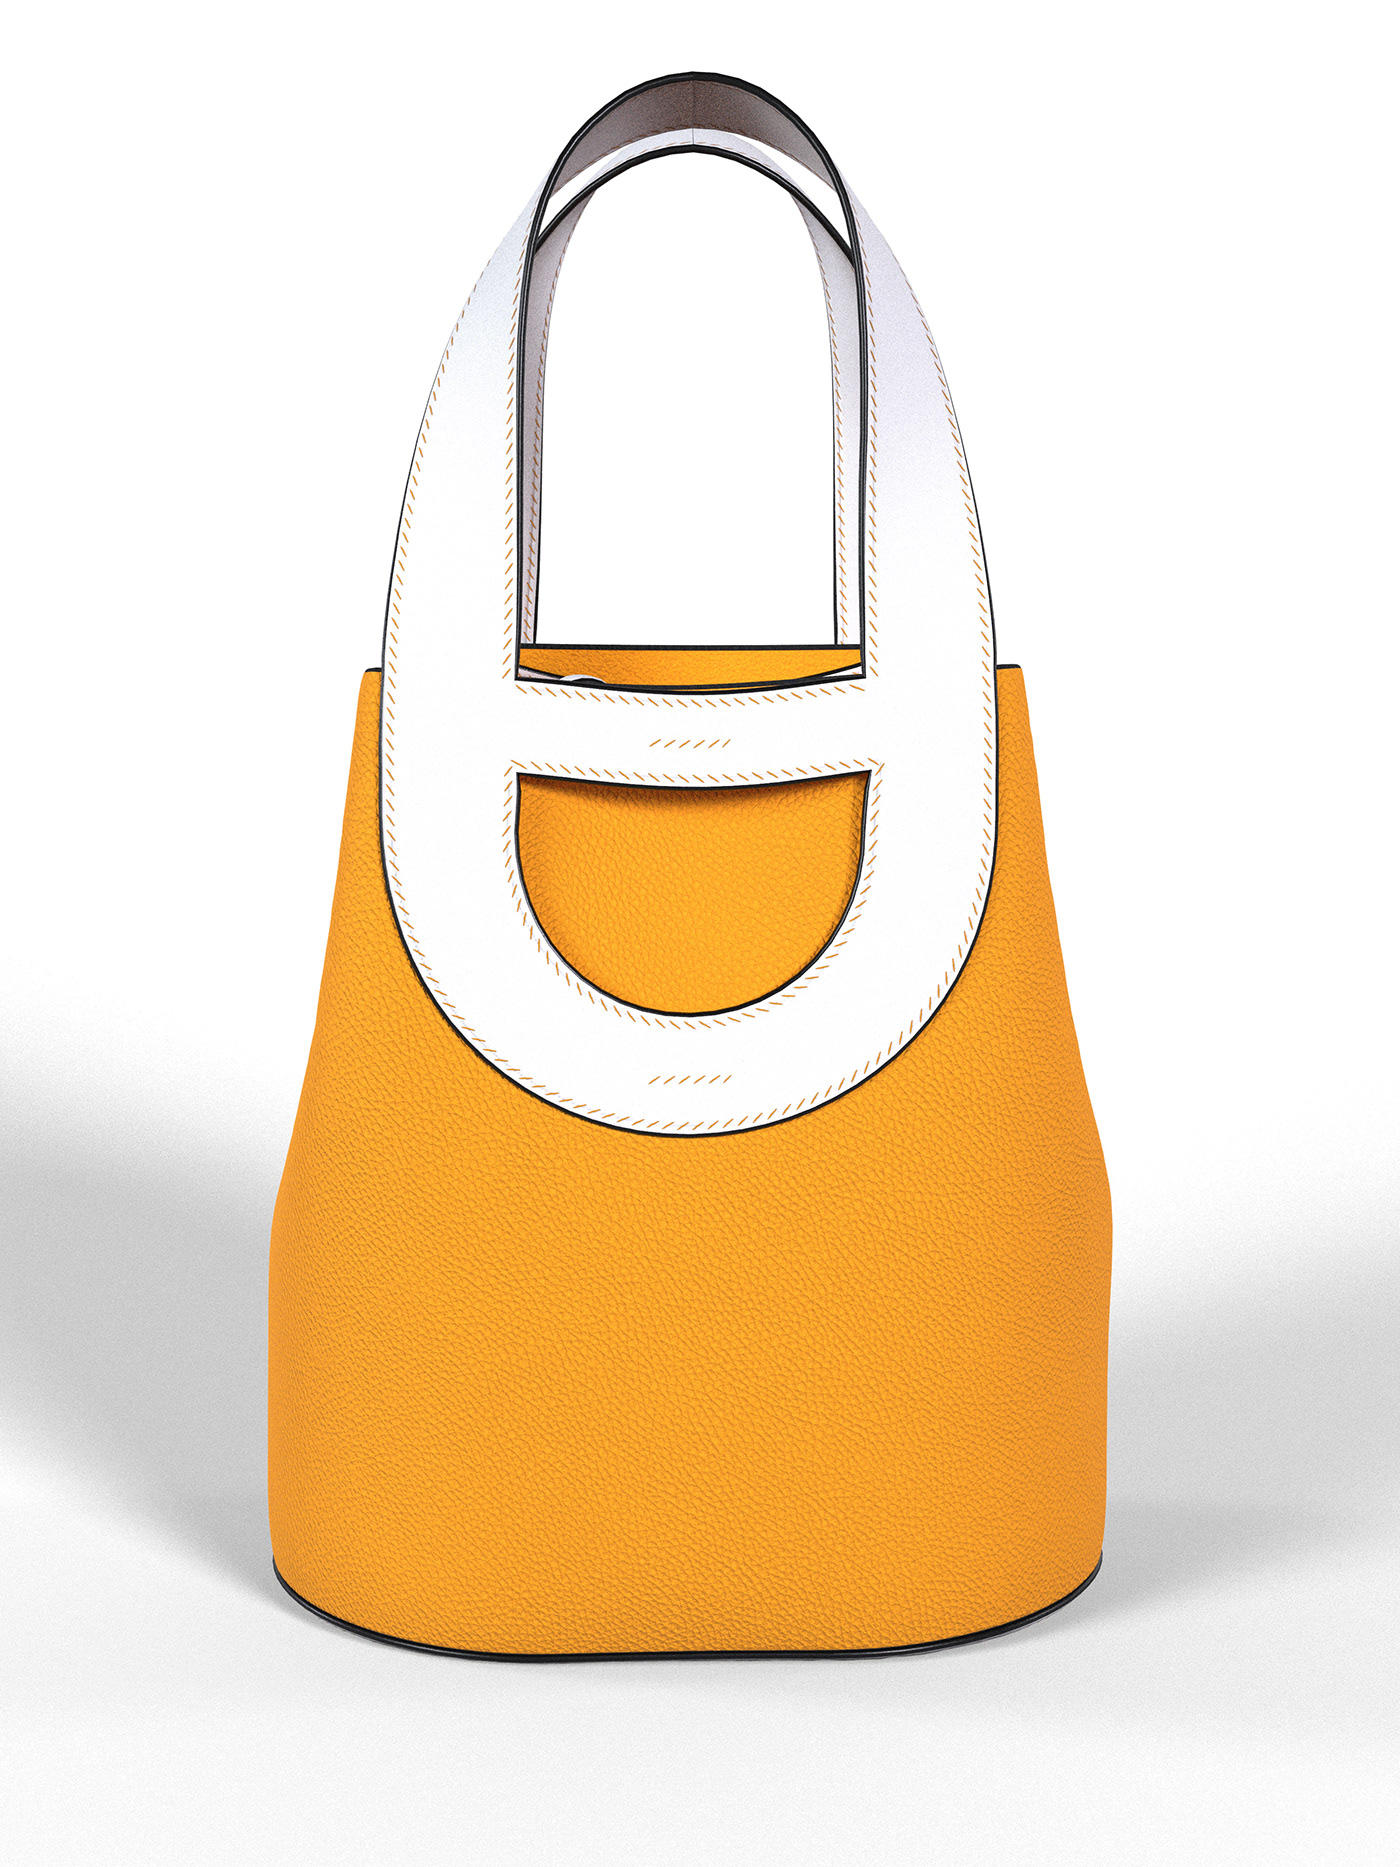 Accessory leather handmade bag design Clo3d fashion design